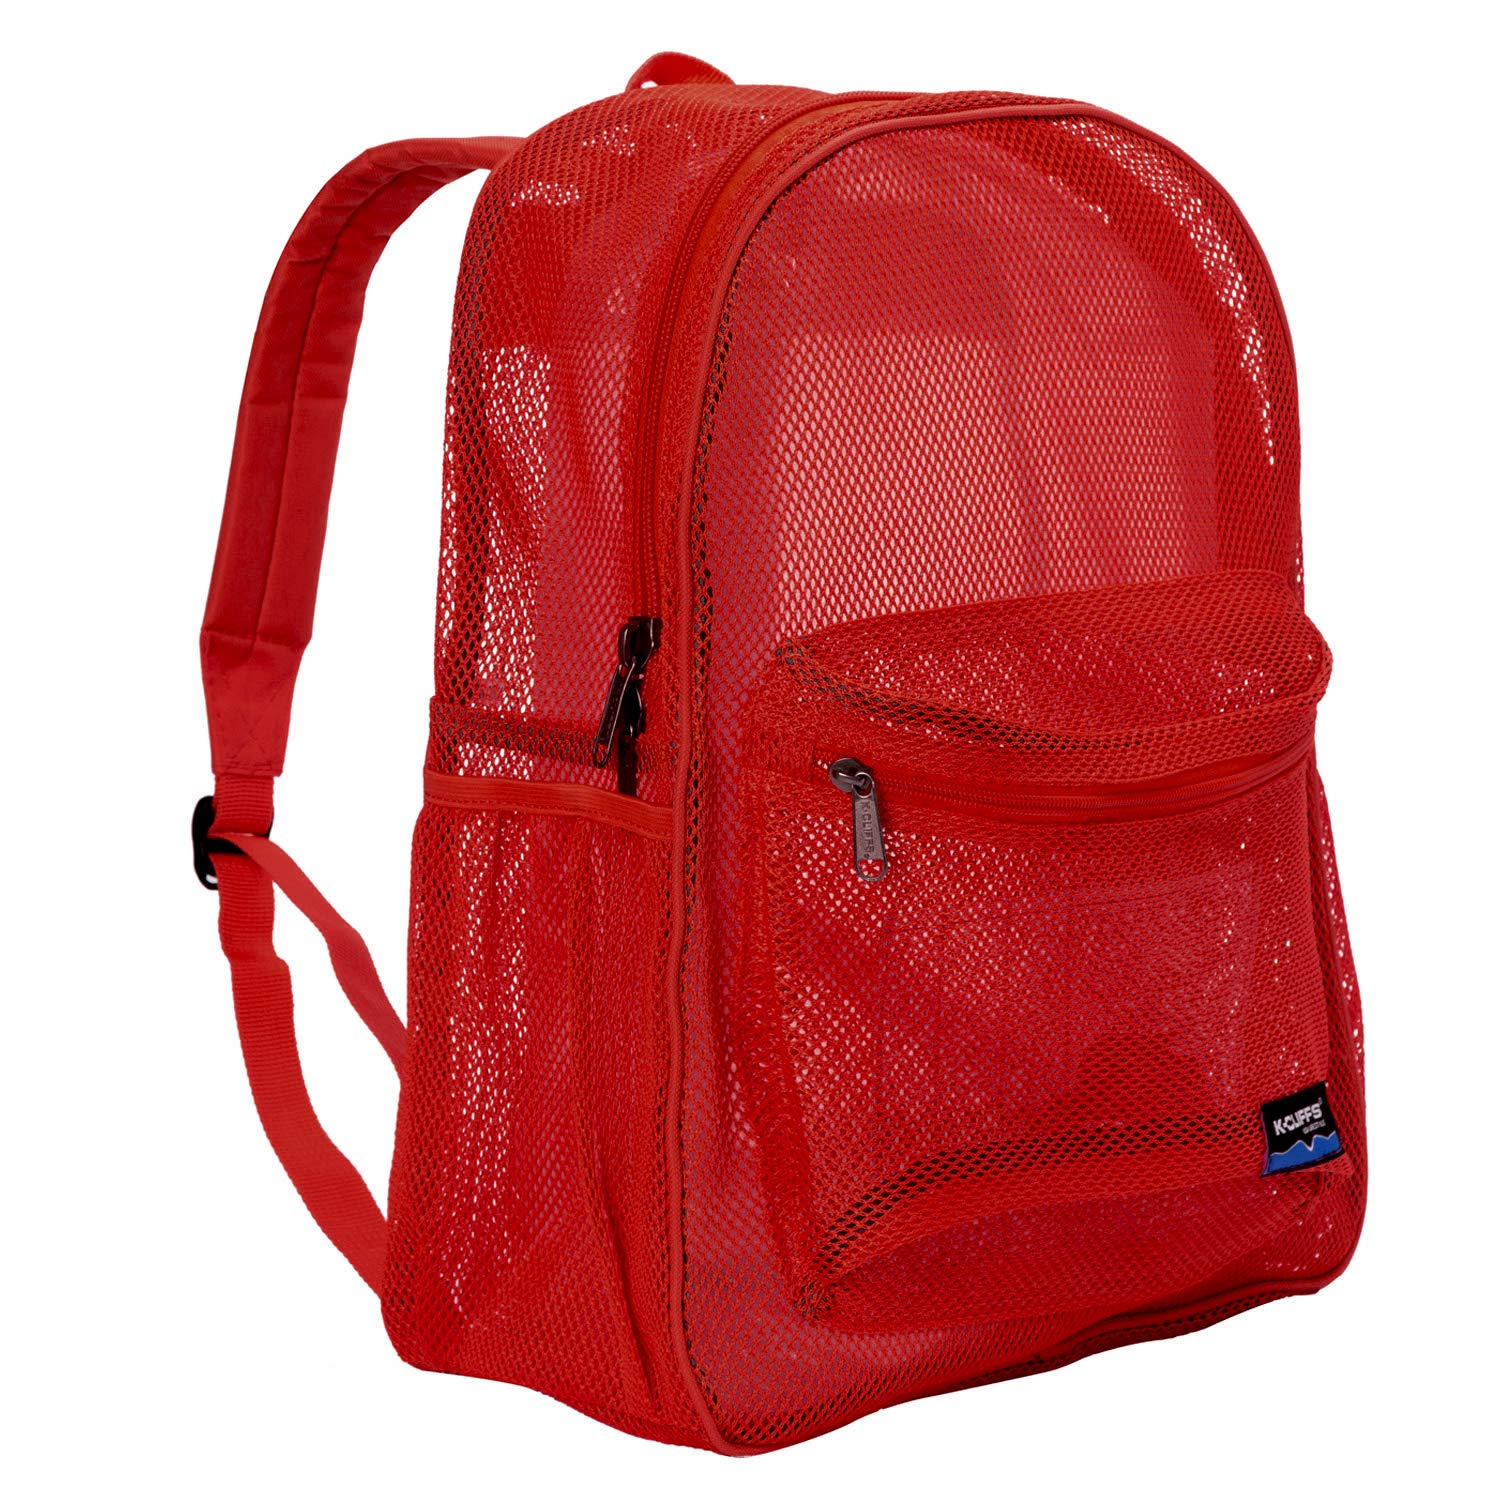 Mesh Backpack Heavy Duty Student Bookbag Quality Simple Classic School Book Bag